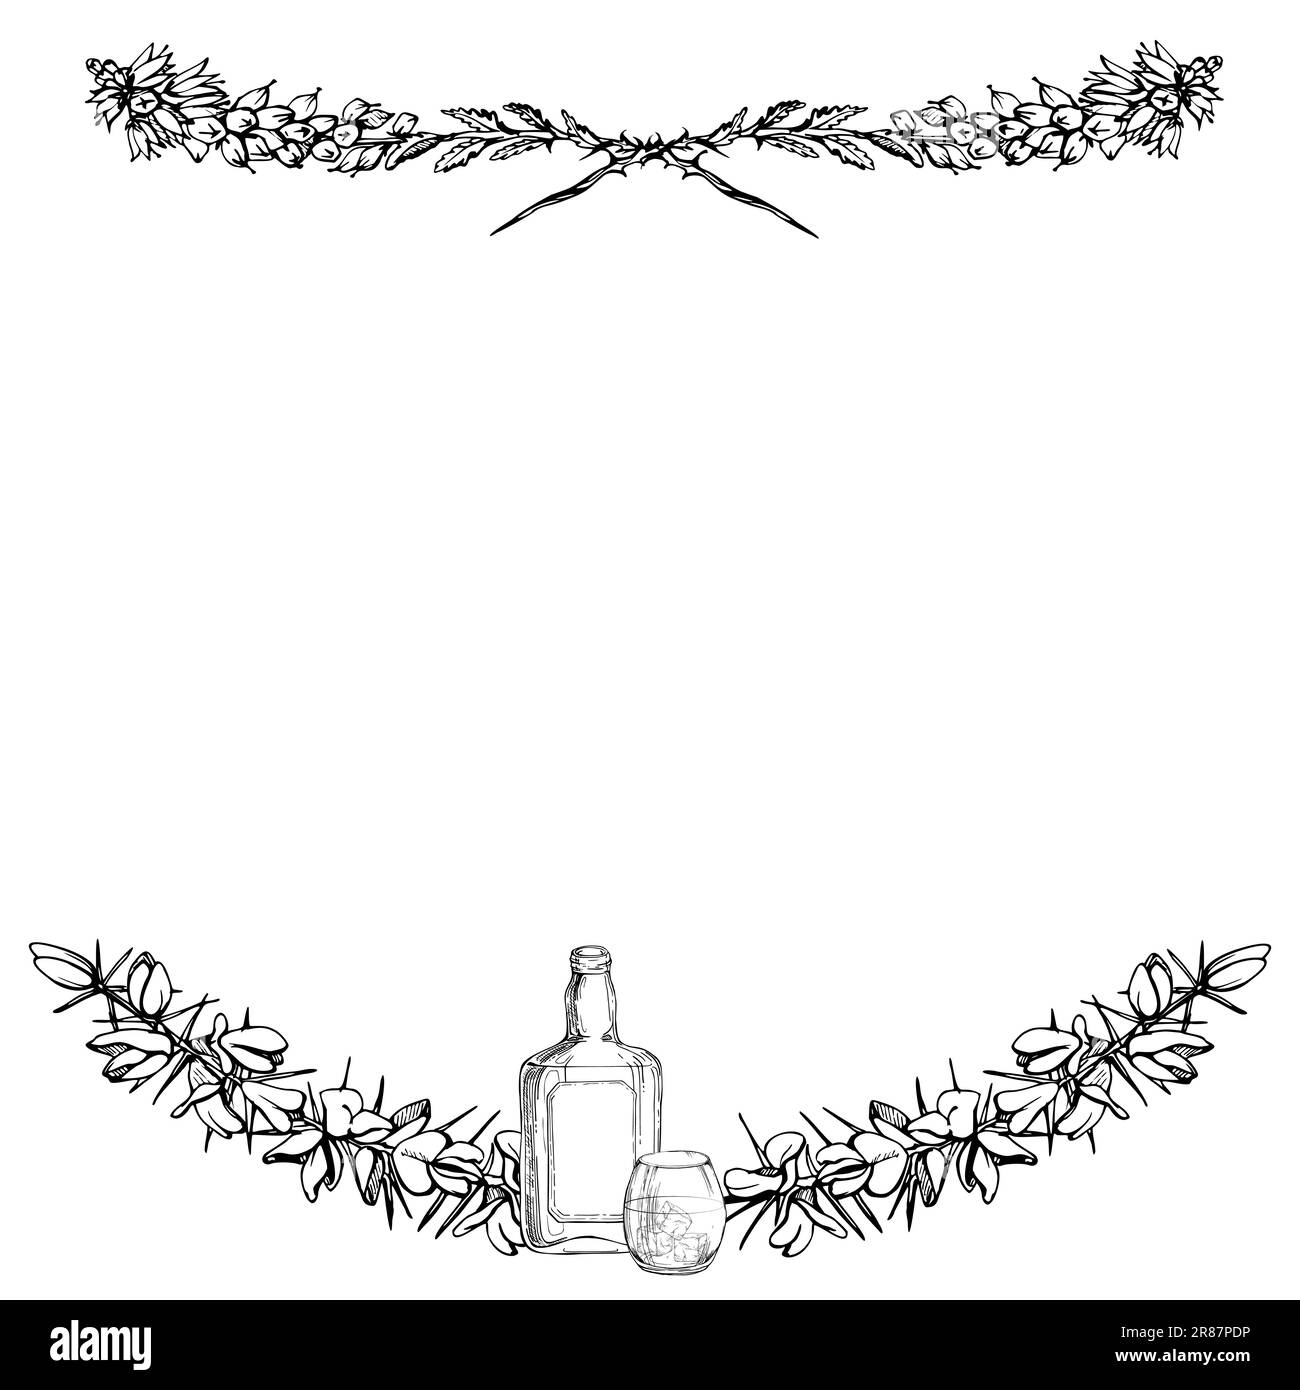 Ink hand drawn vector illustration. Scotland symbols. Scotch scottish whisky whiskey glass and bottle, heather plant flower border. Square frame Stock Vector